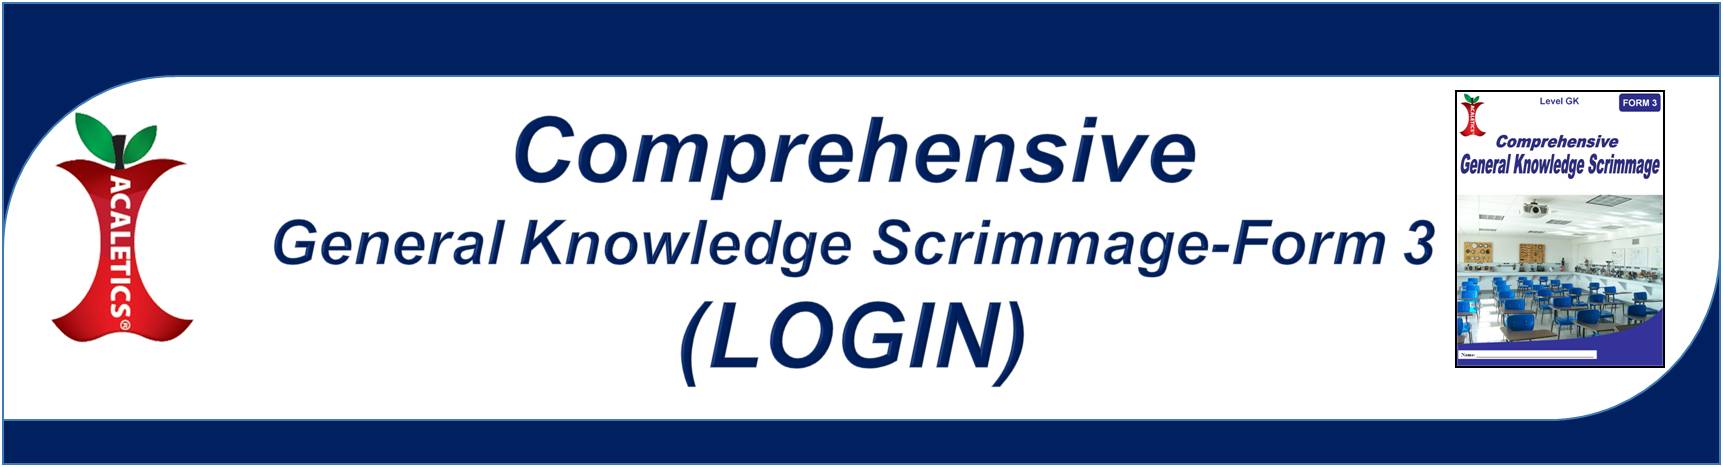 Comprehensive General Knowledge Scrimmage - Form 3